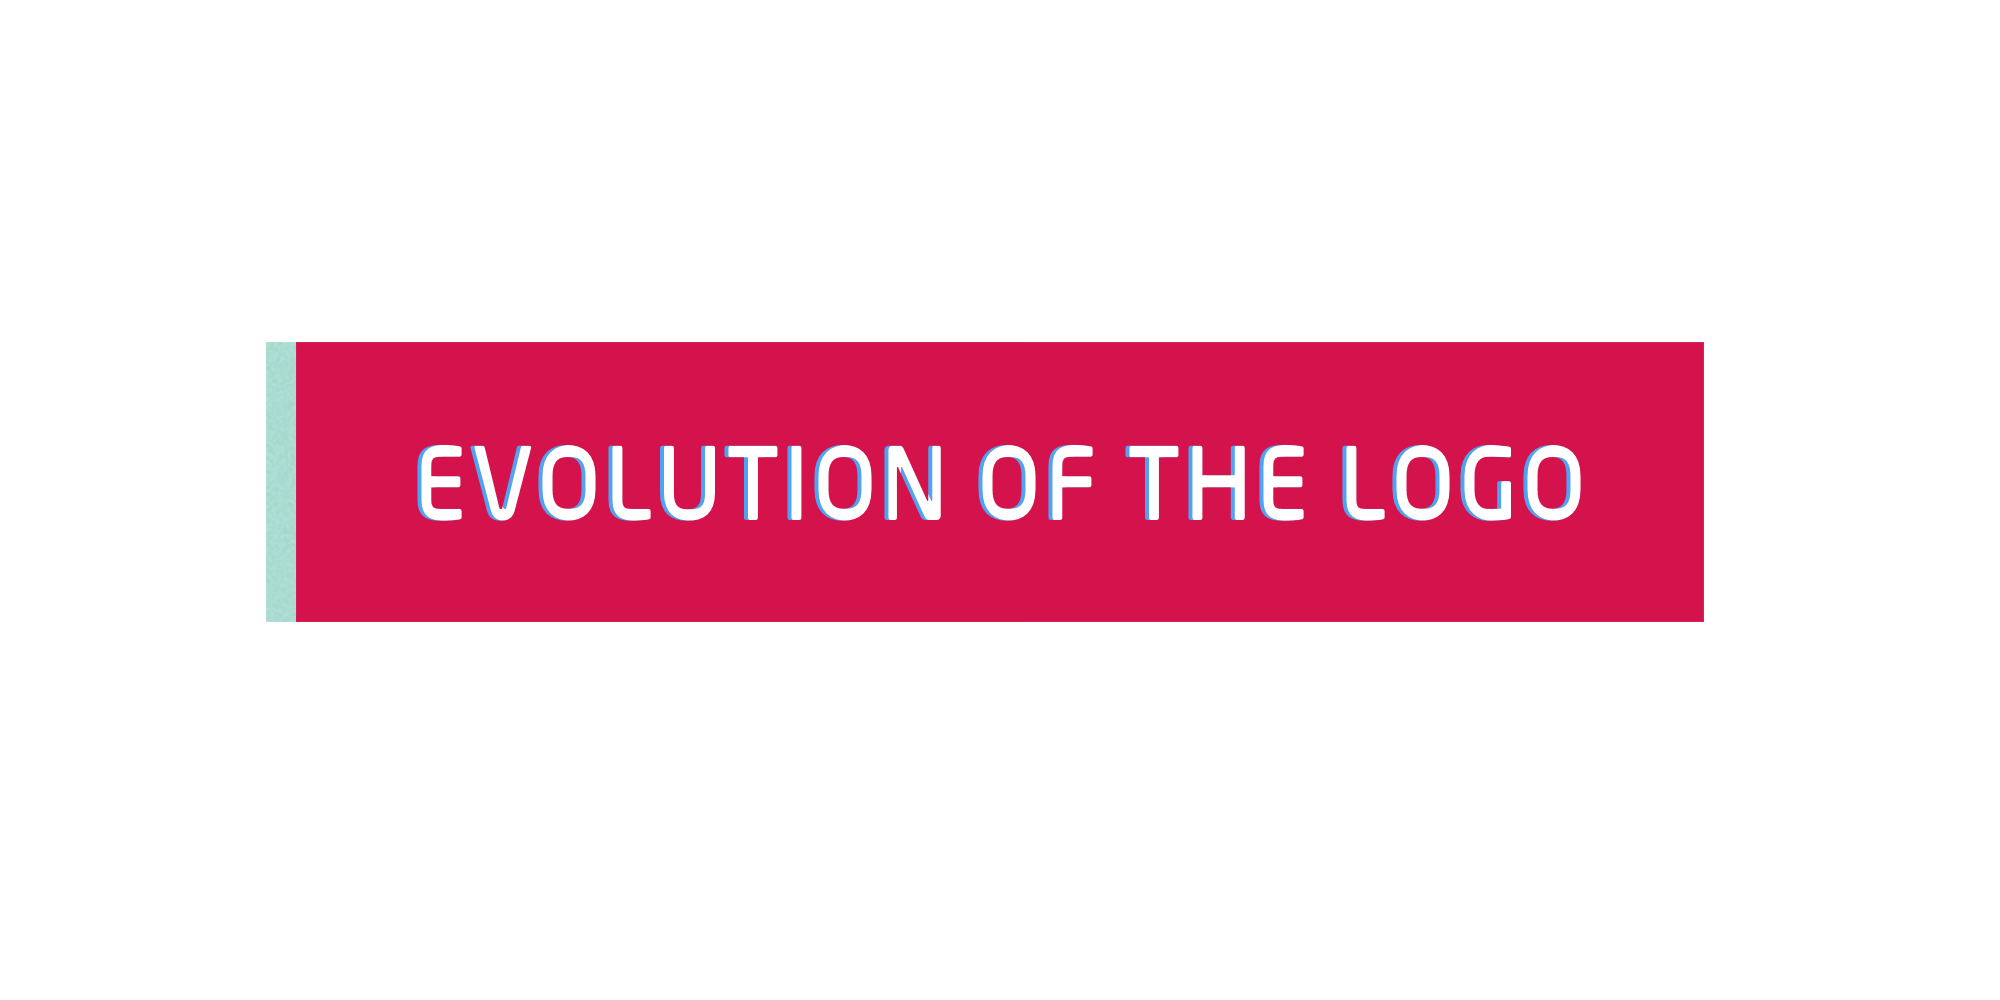 Evolution of the logo